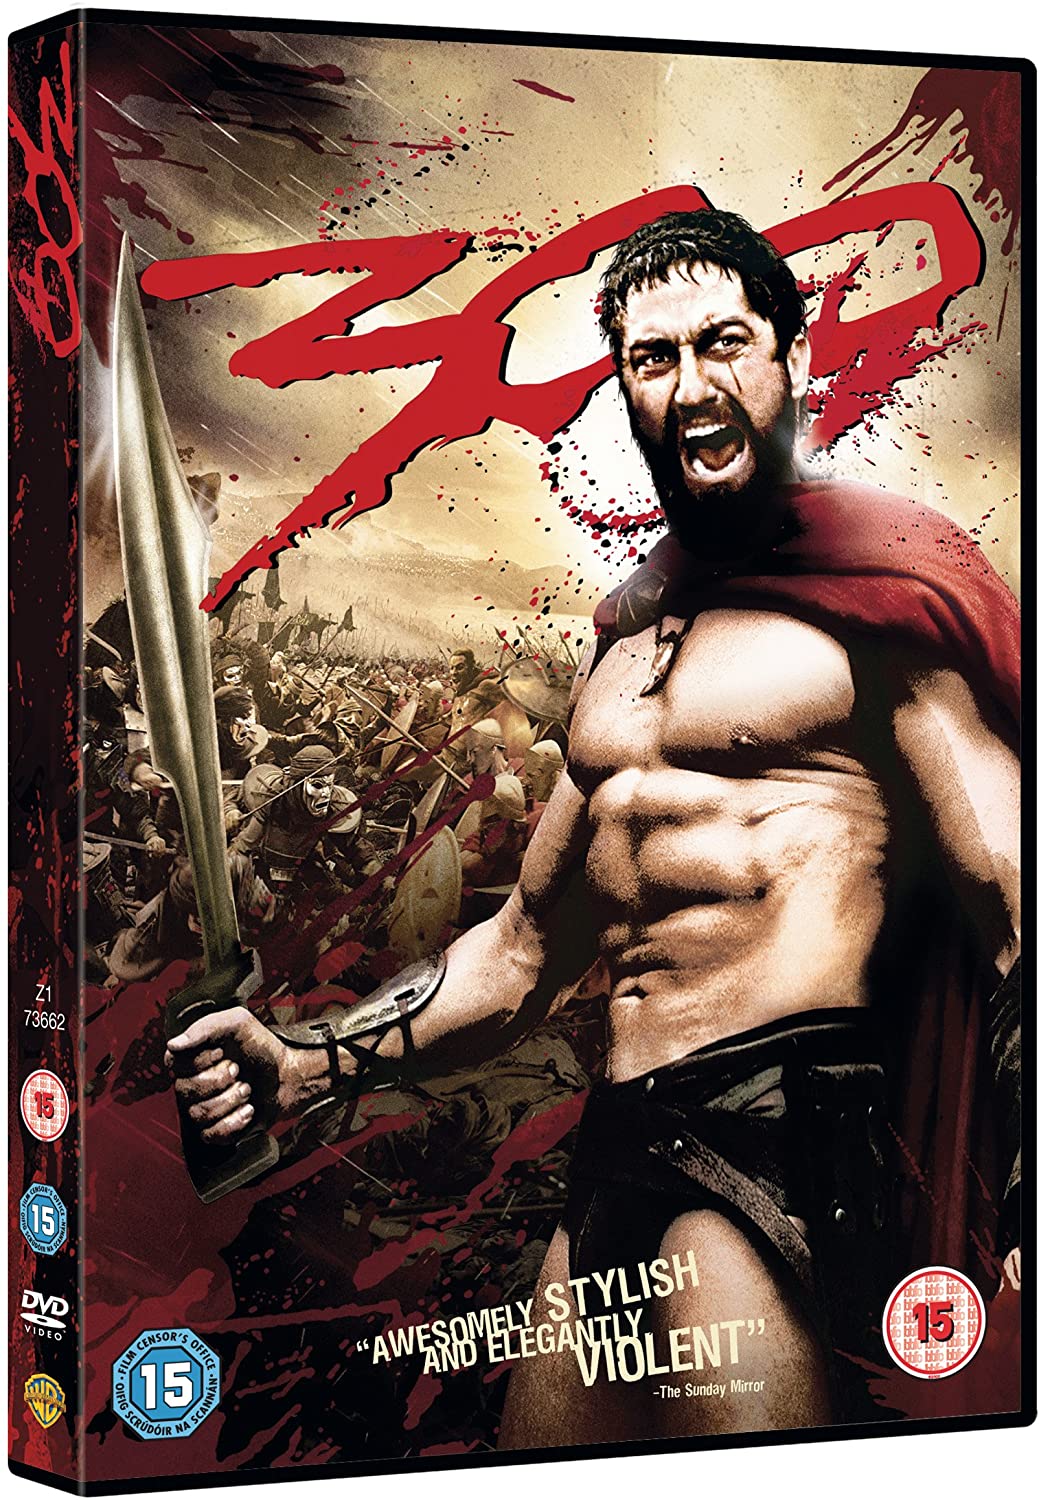 300 [2007] - Action/War [DVD]